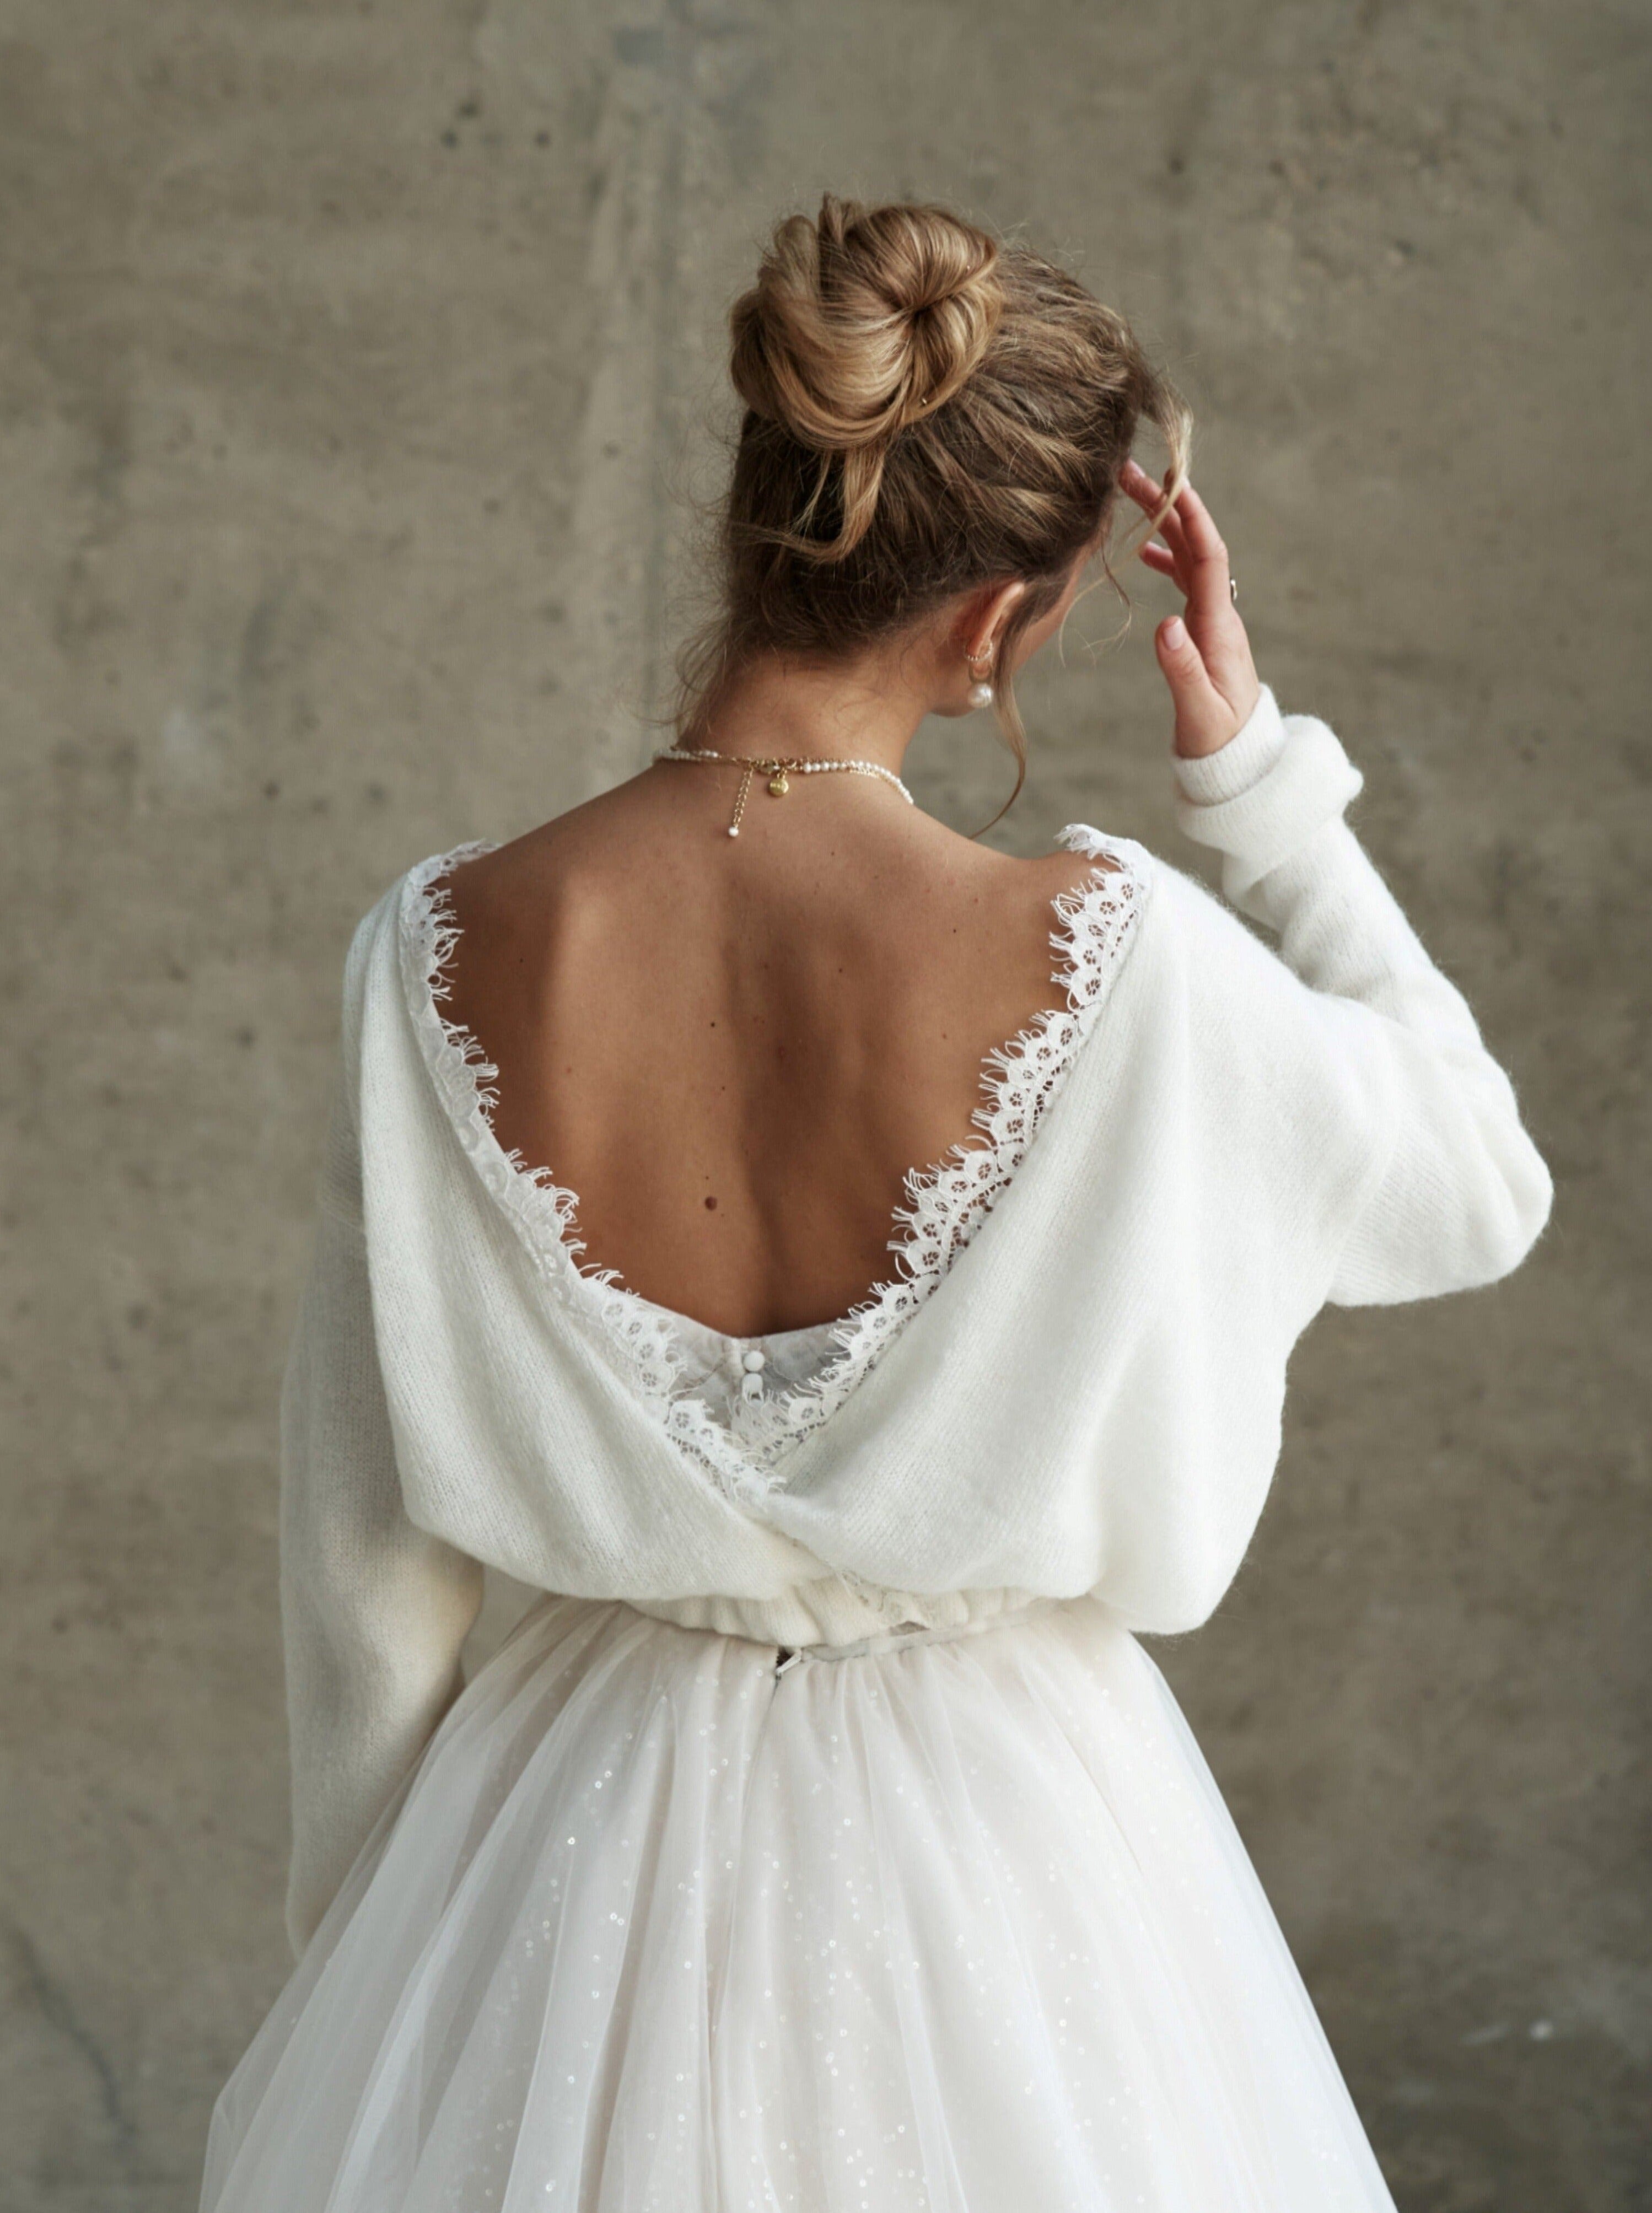 Bridal Sweater with Lace - ArtPodium Studio